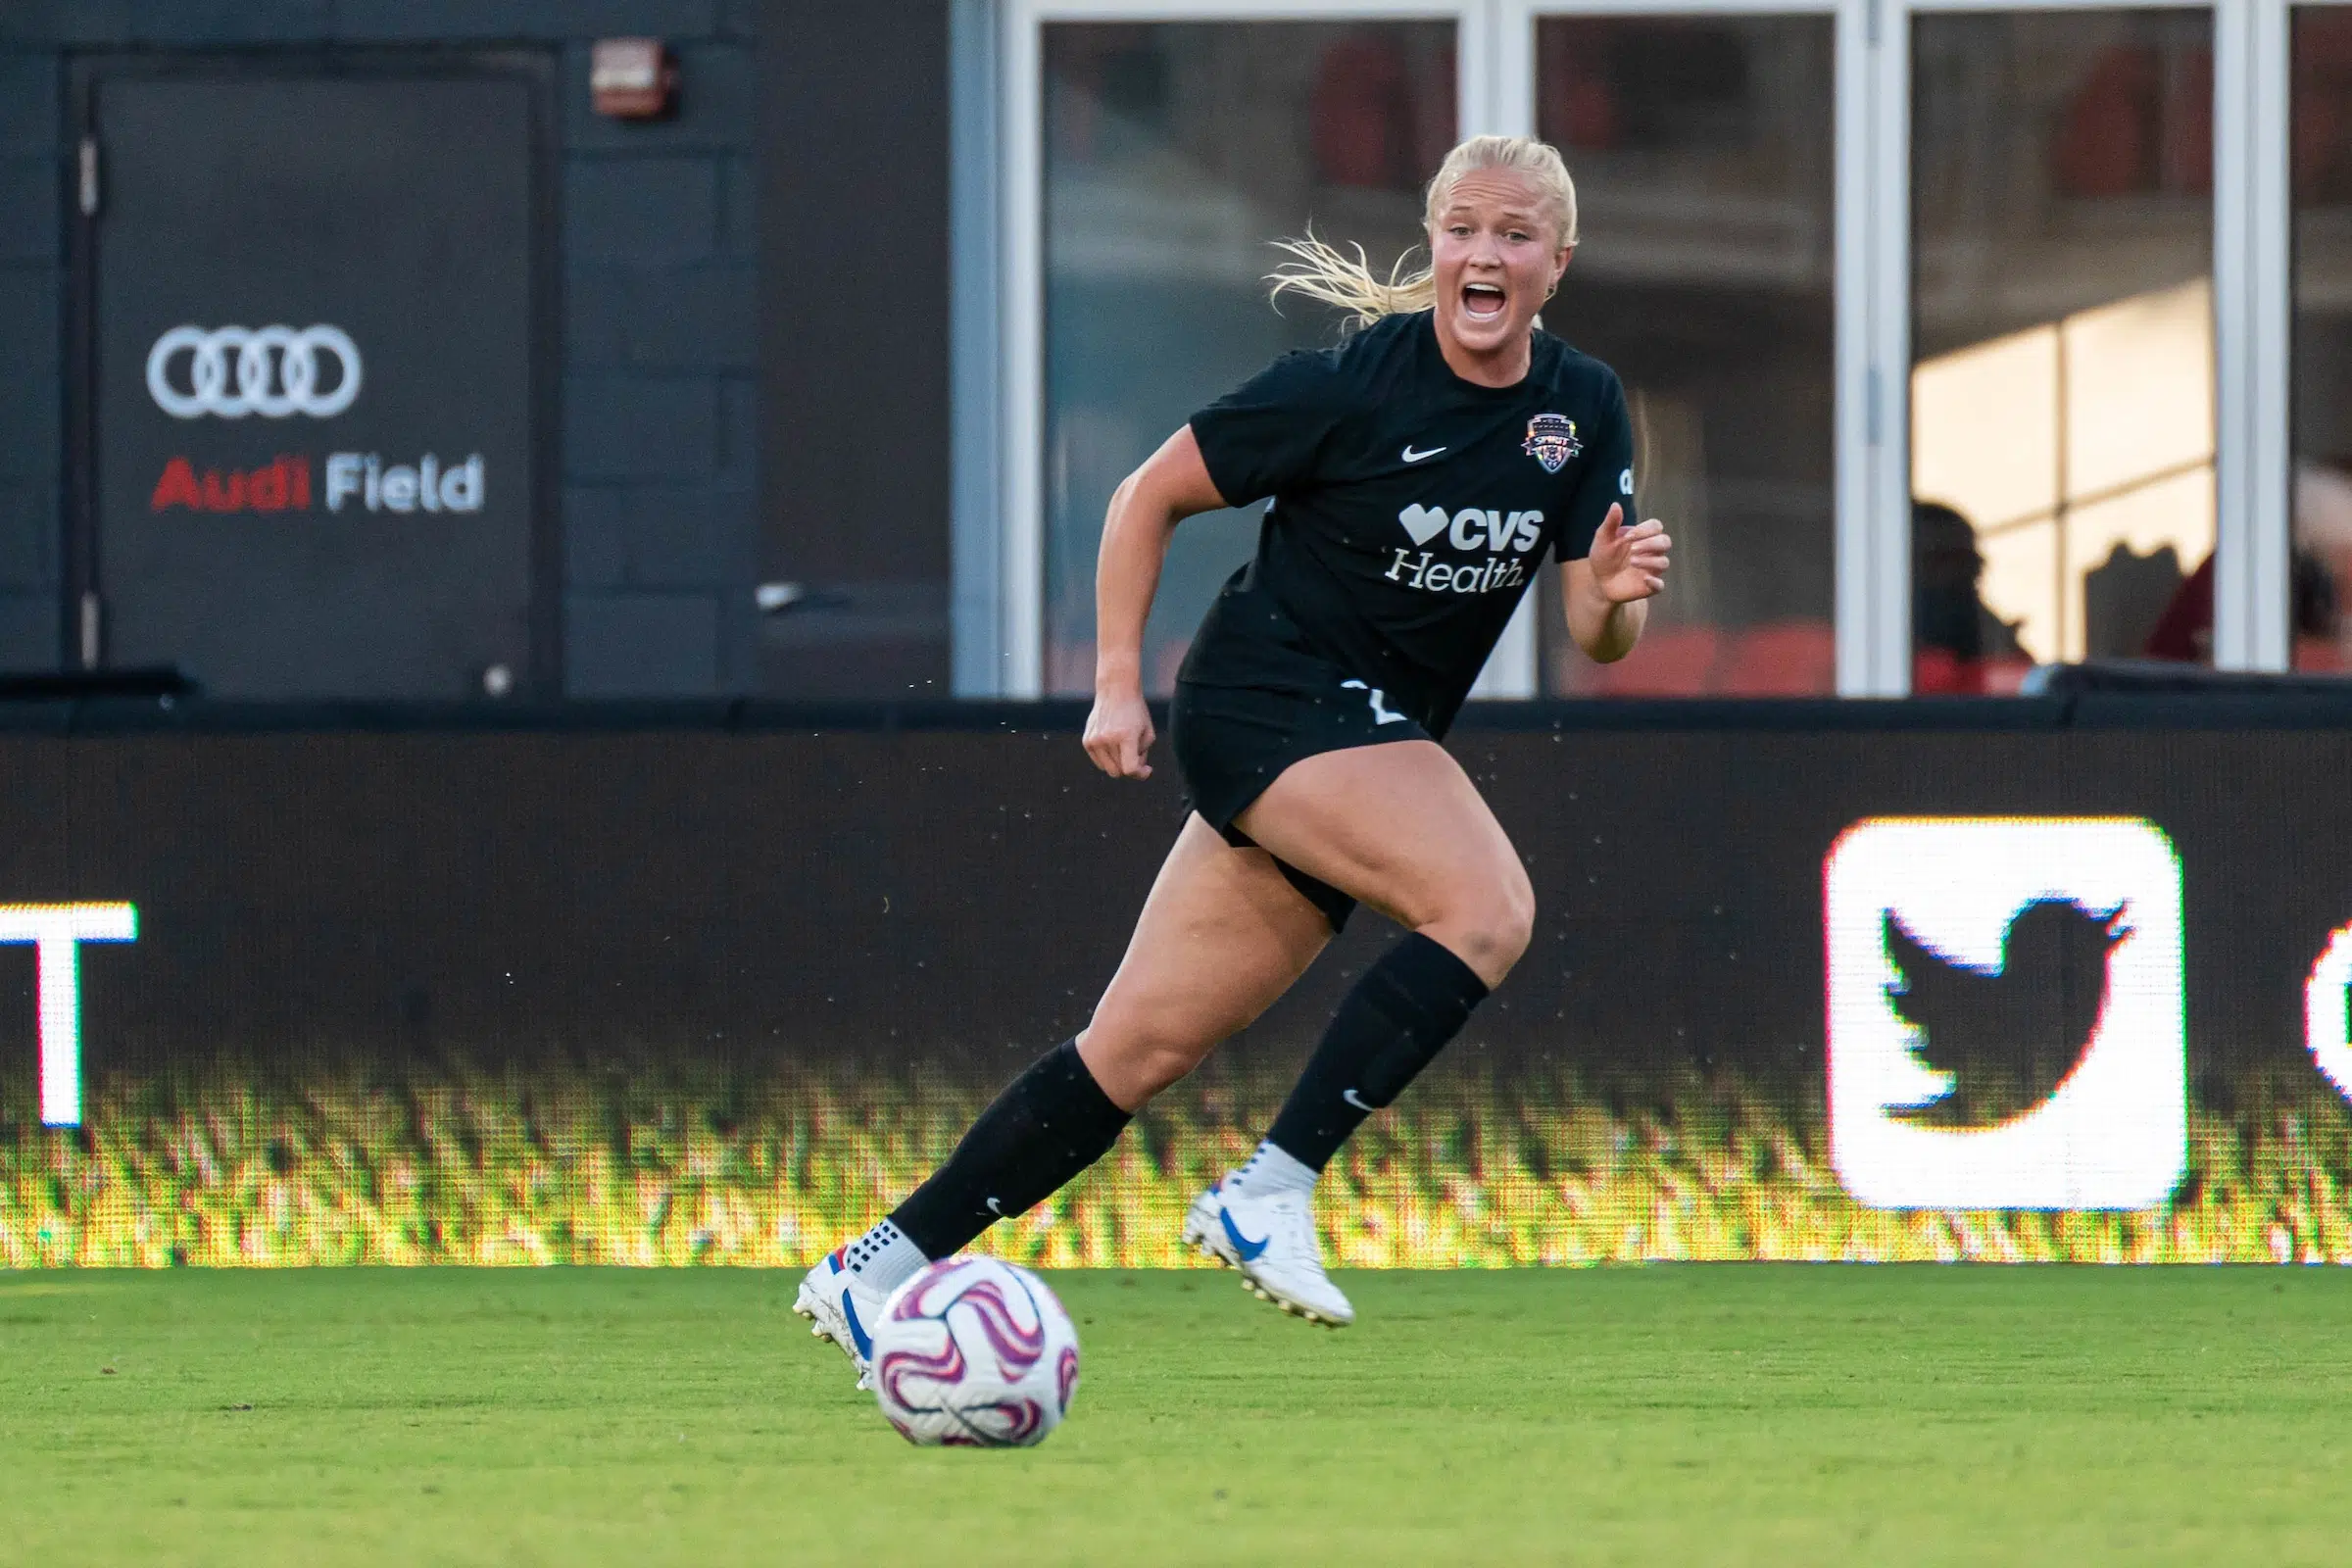 Civana Kuhlmann in a black uniform runs down the field and calls for the ball.